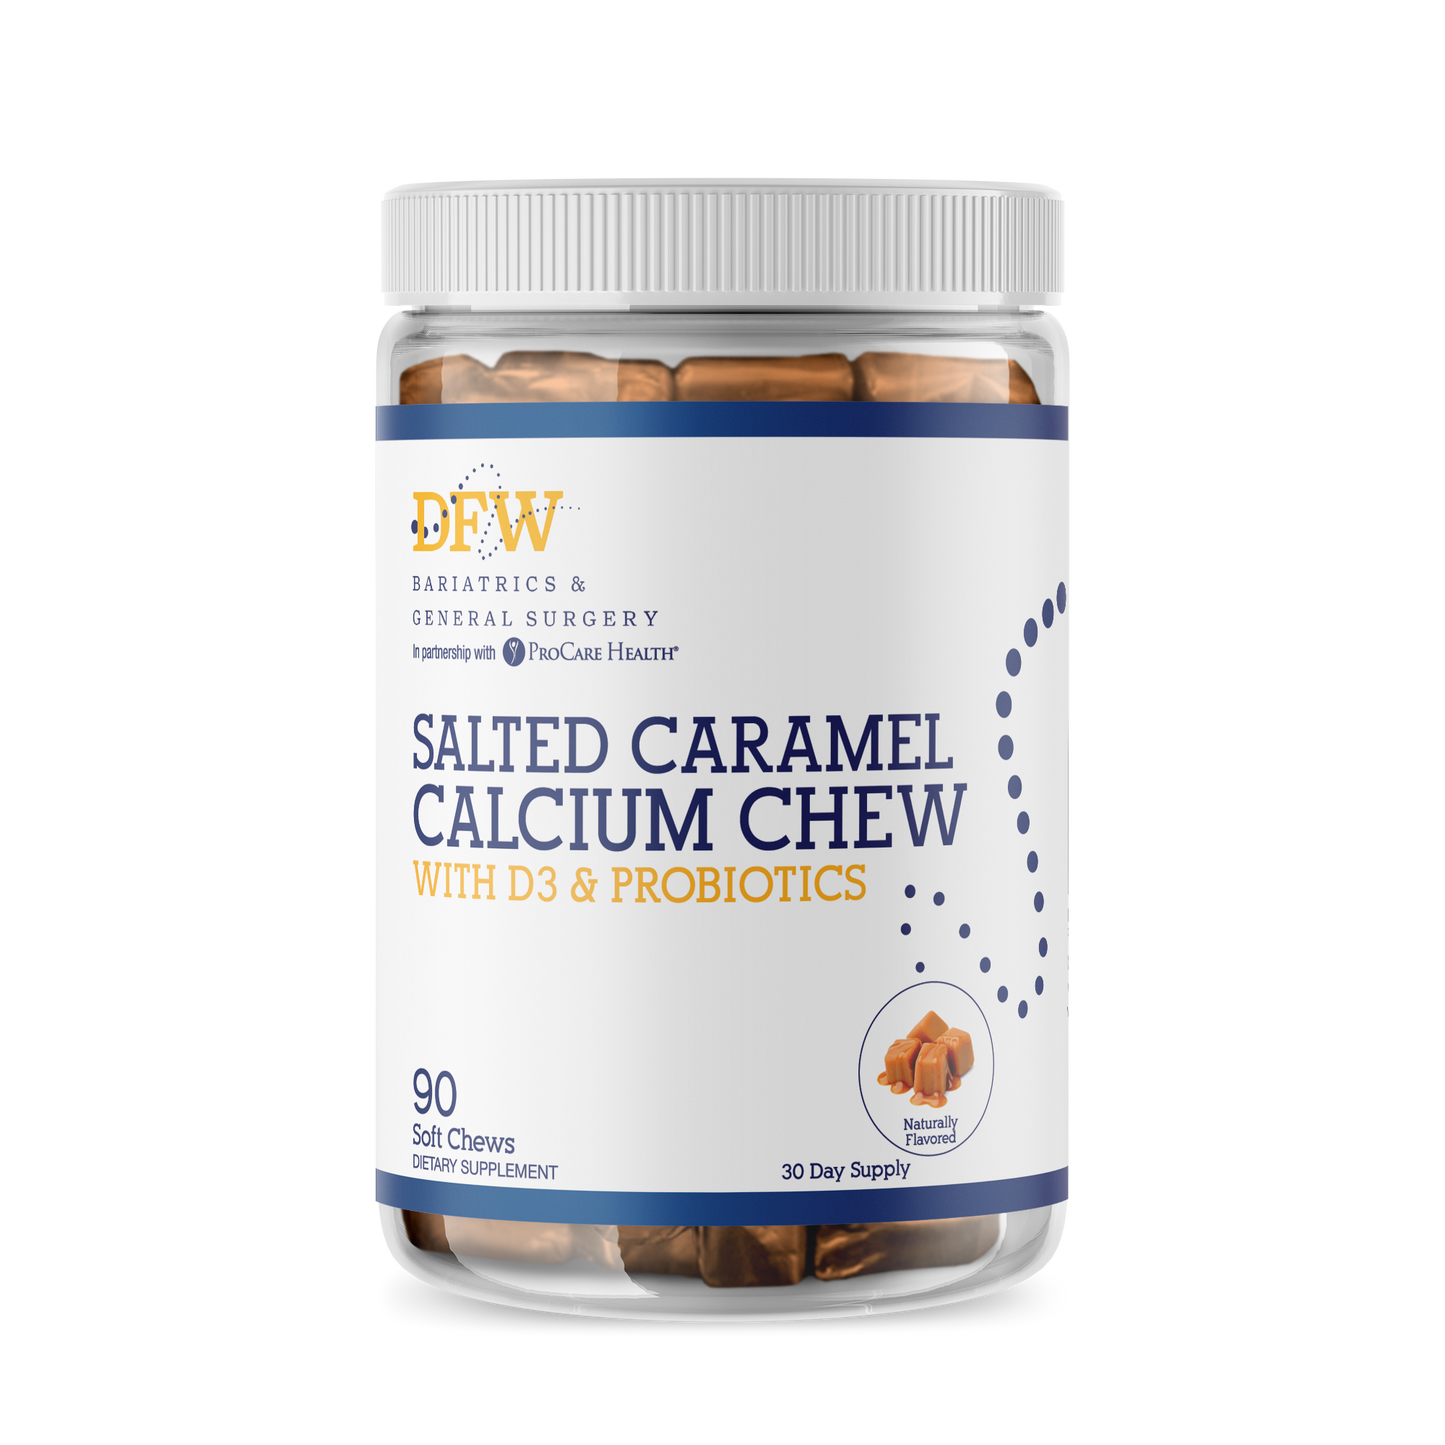 500mg Calcium Chews Dinner Mint, ProCare Health